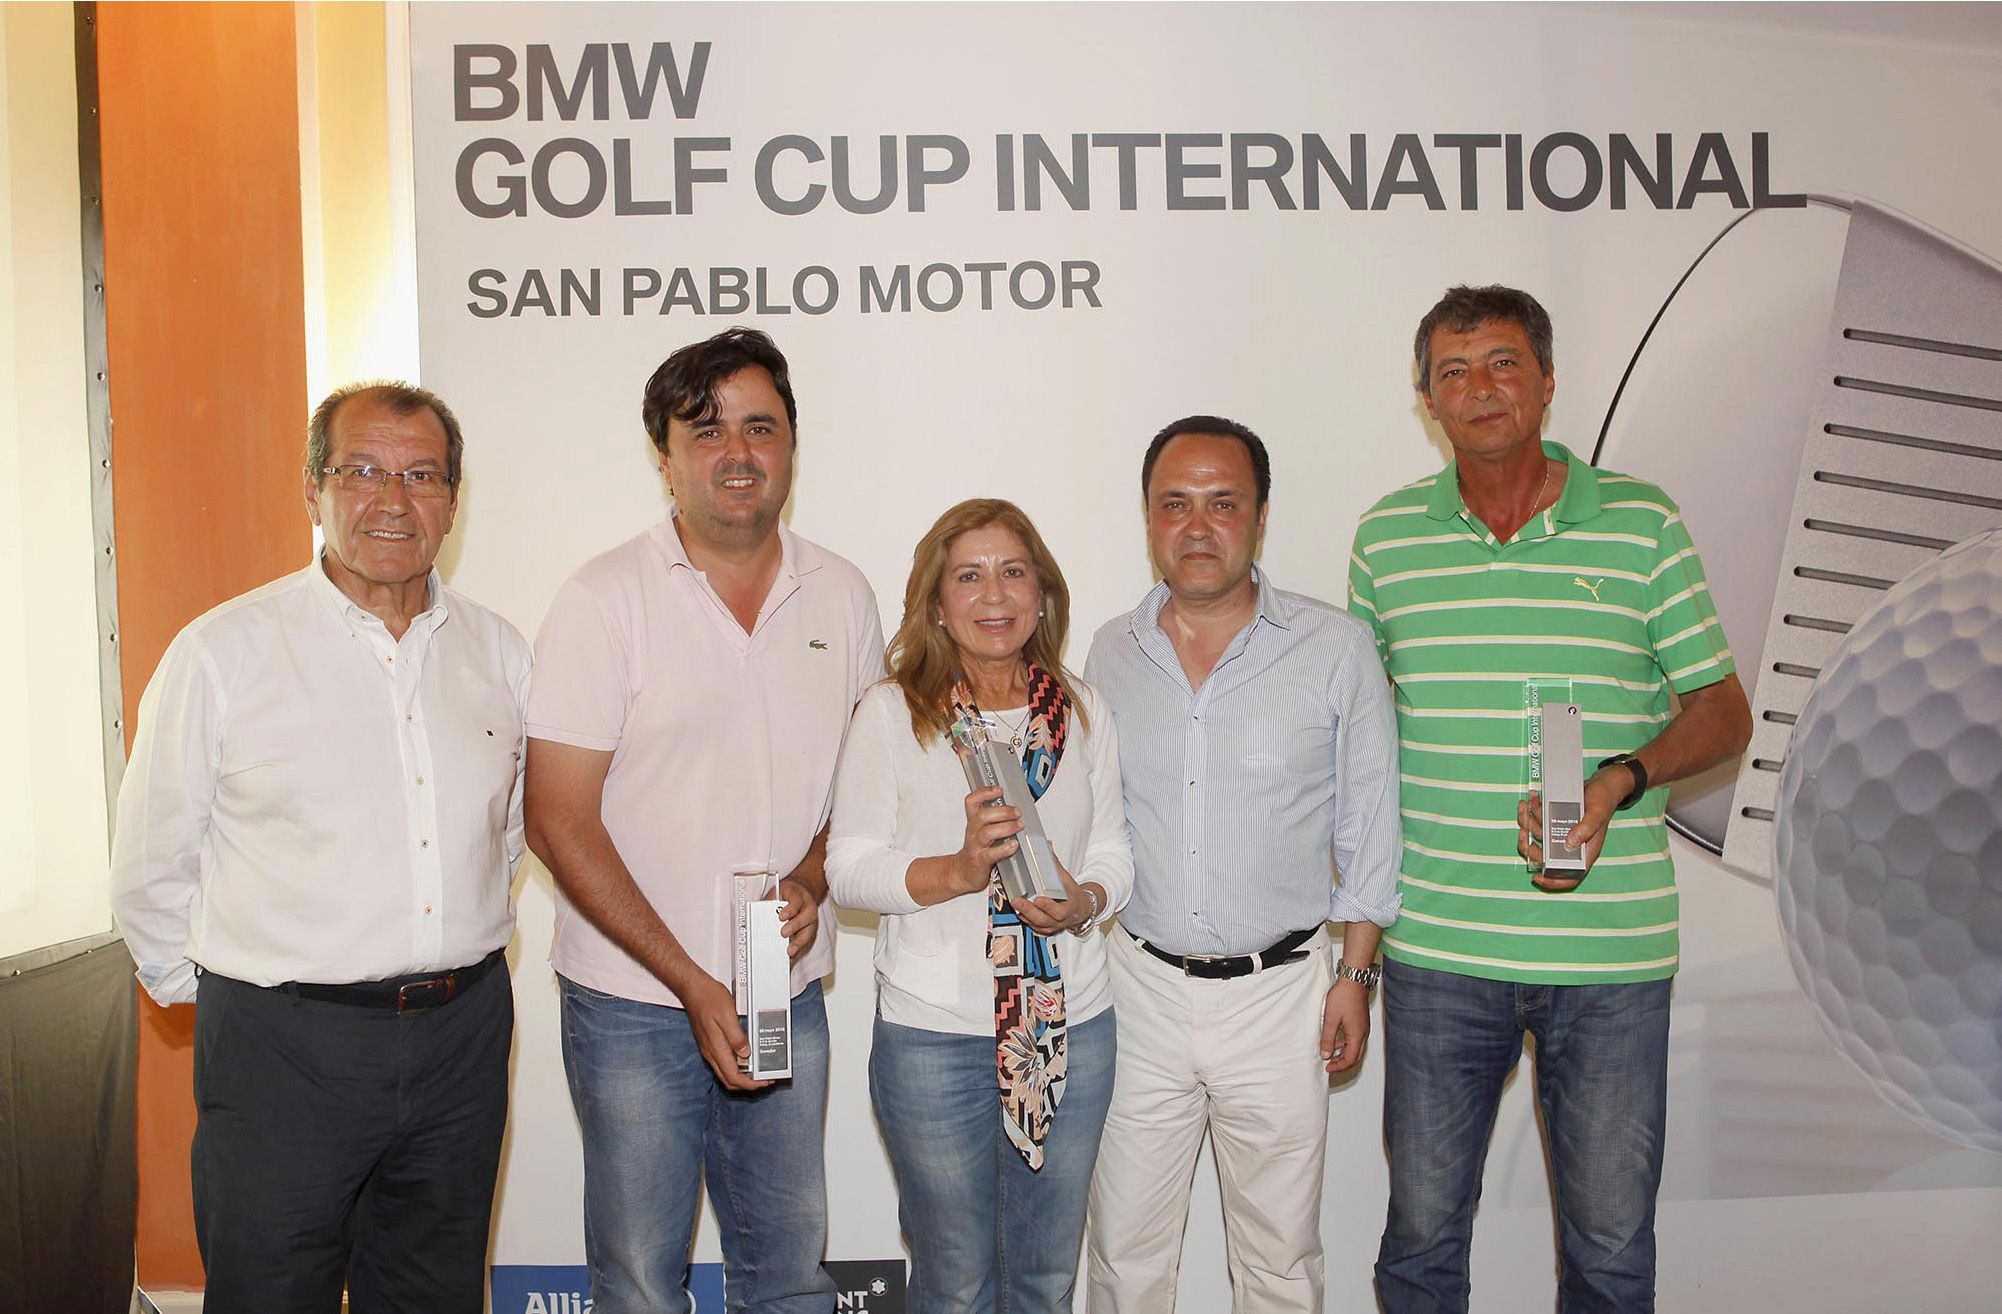 BMW Golf Cup International – Sevilla, BMW San Pablo Motor